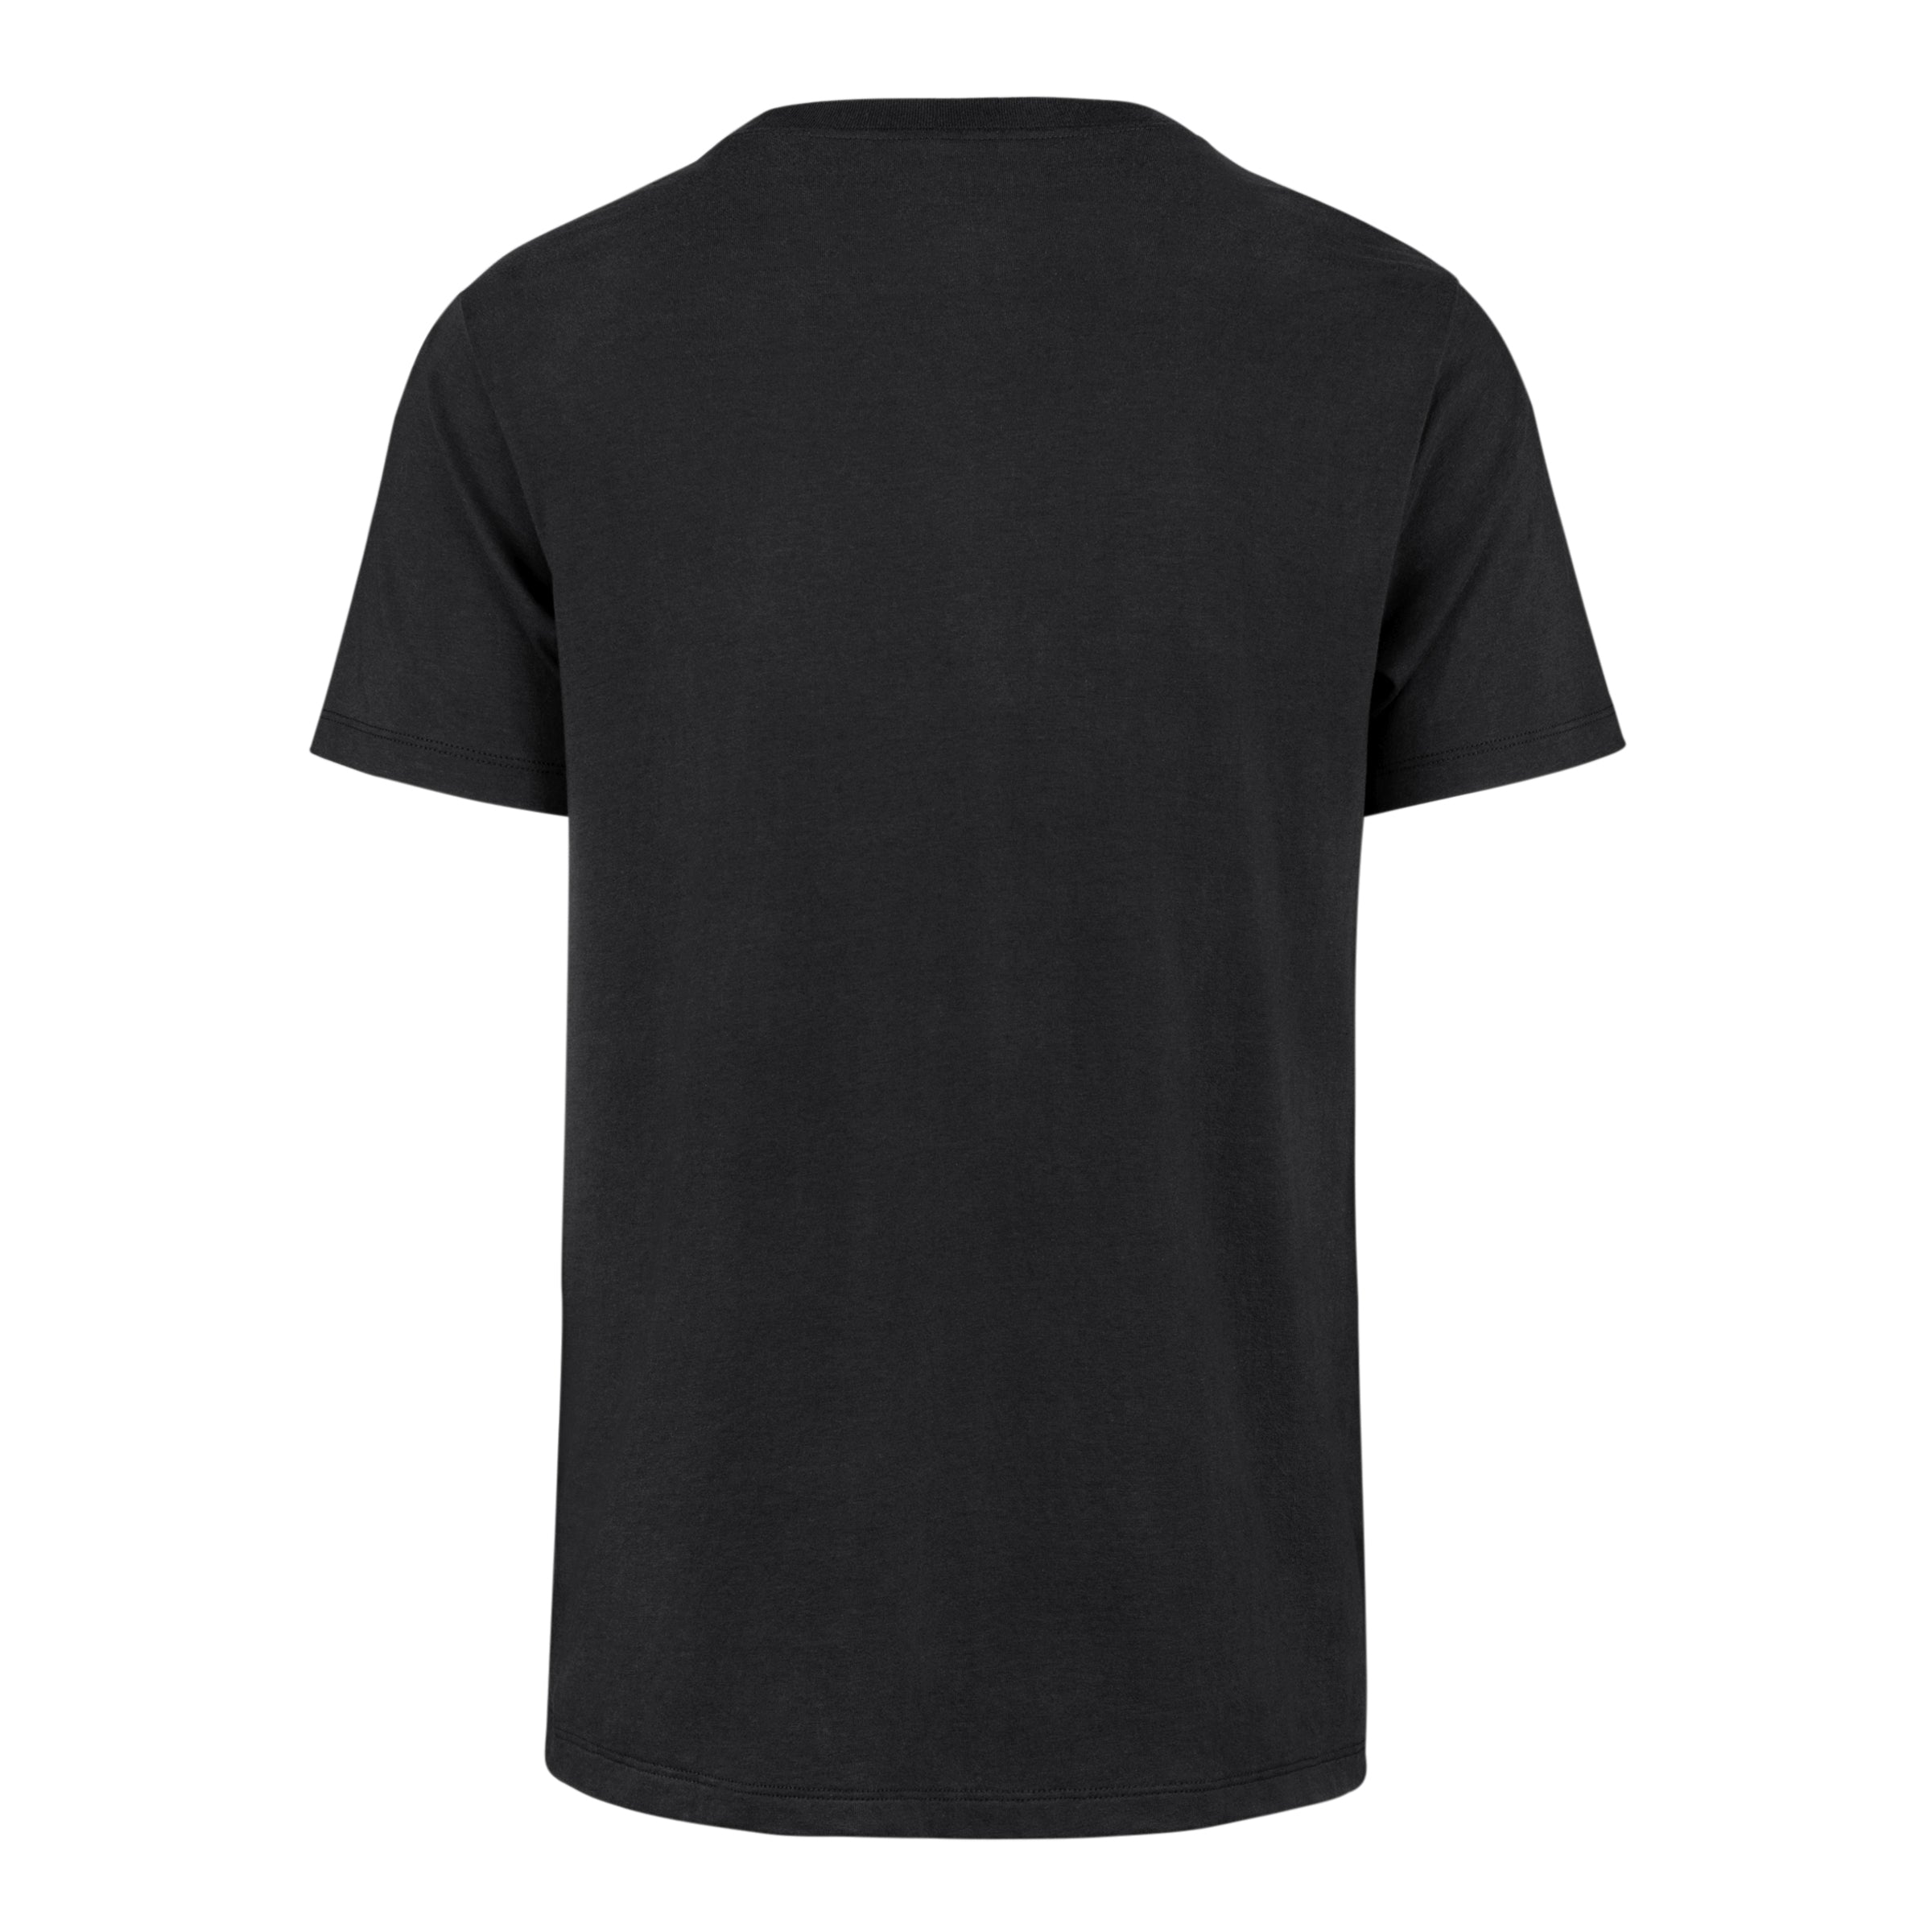 Miami Marlins 47 Brand Cooperstown Nostalgia Franklin T-Shirt - Black